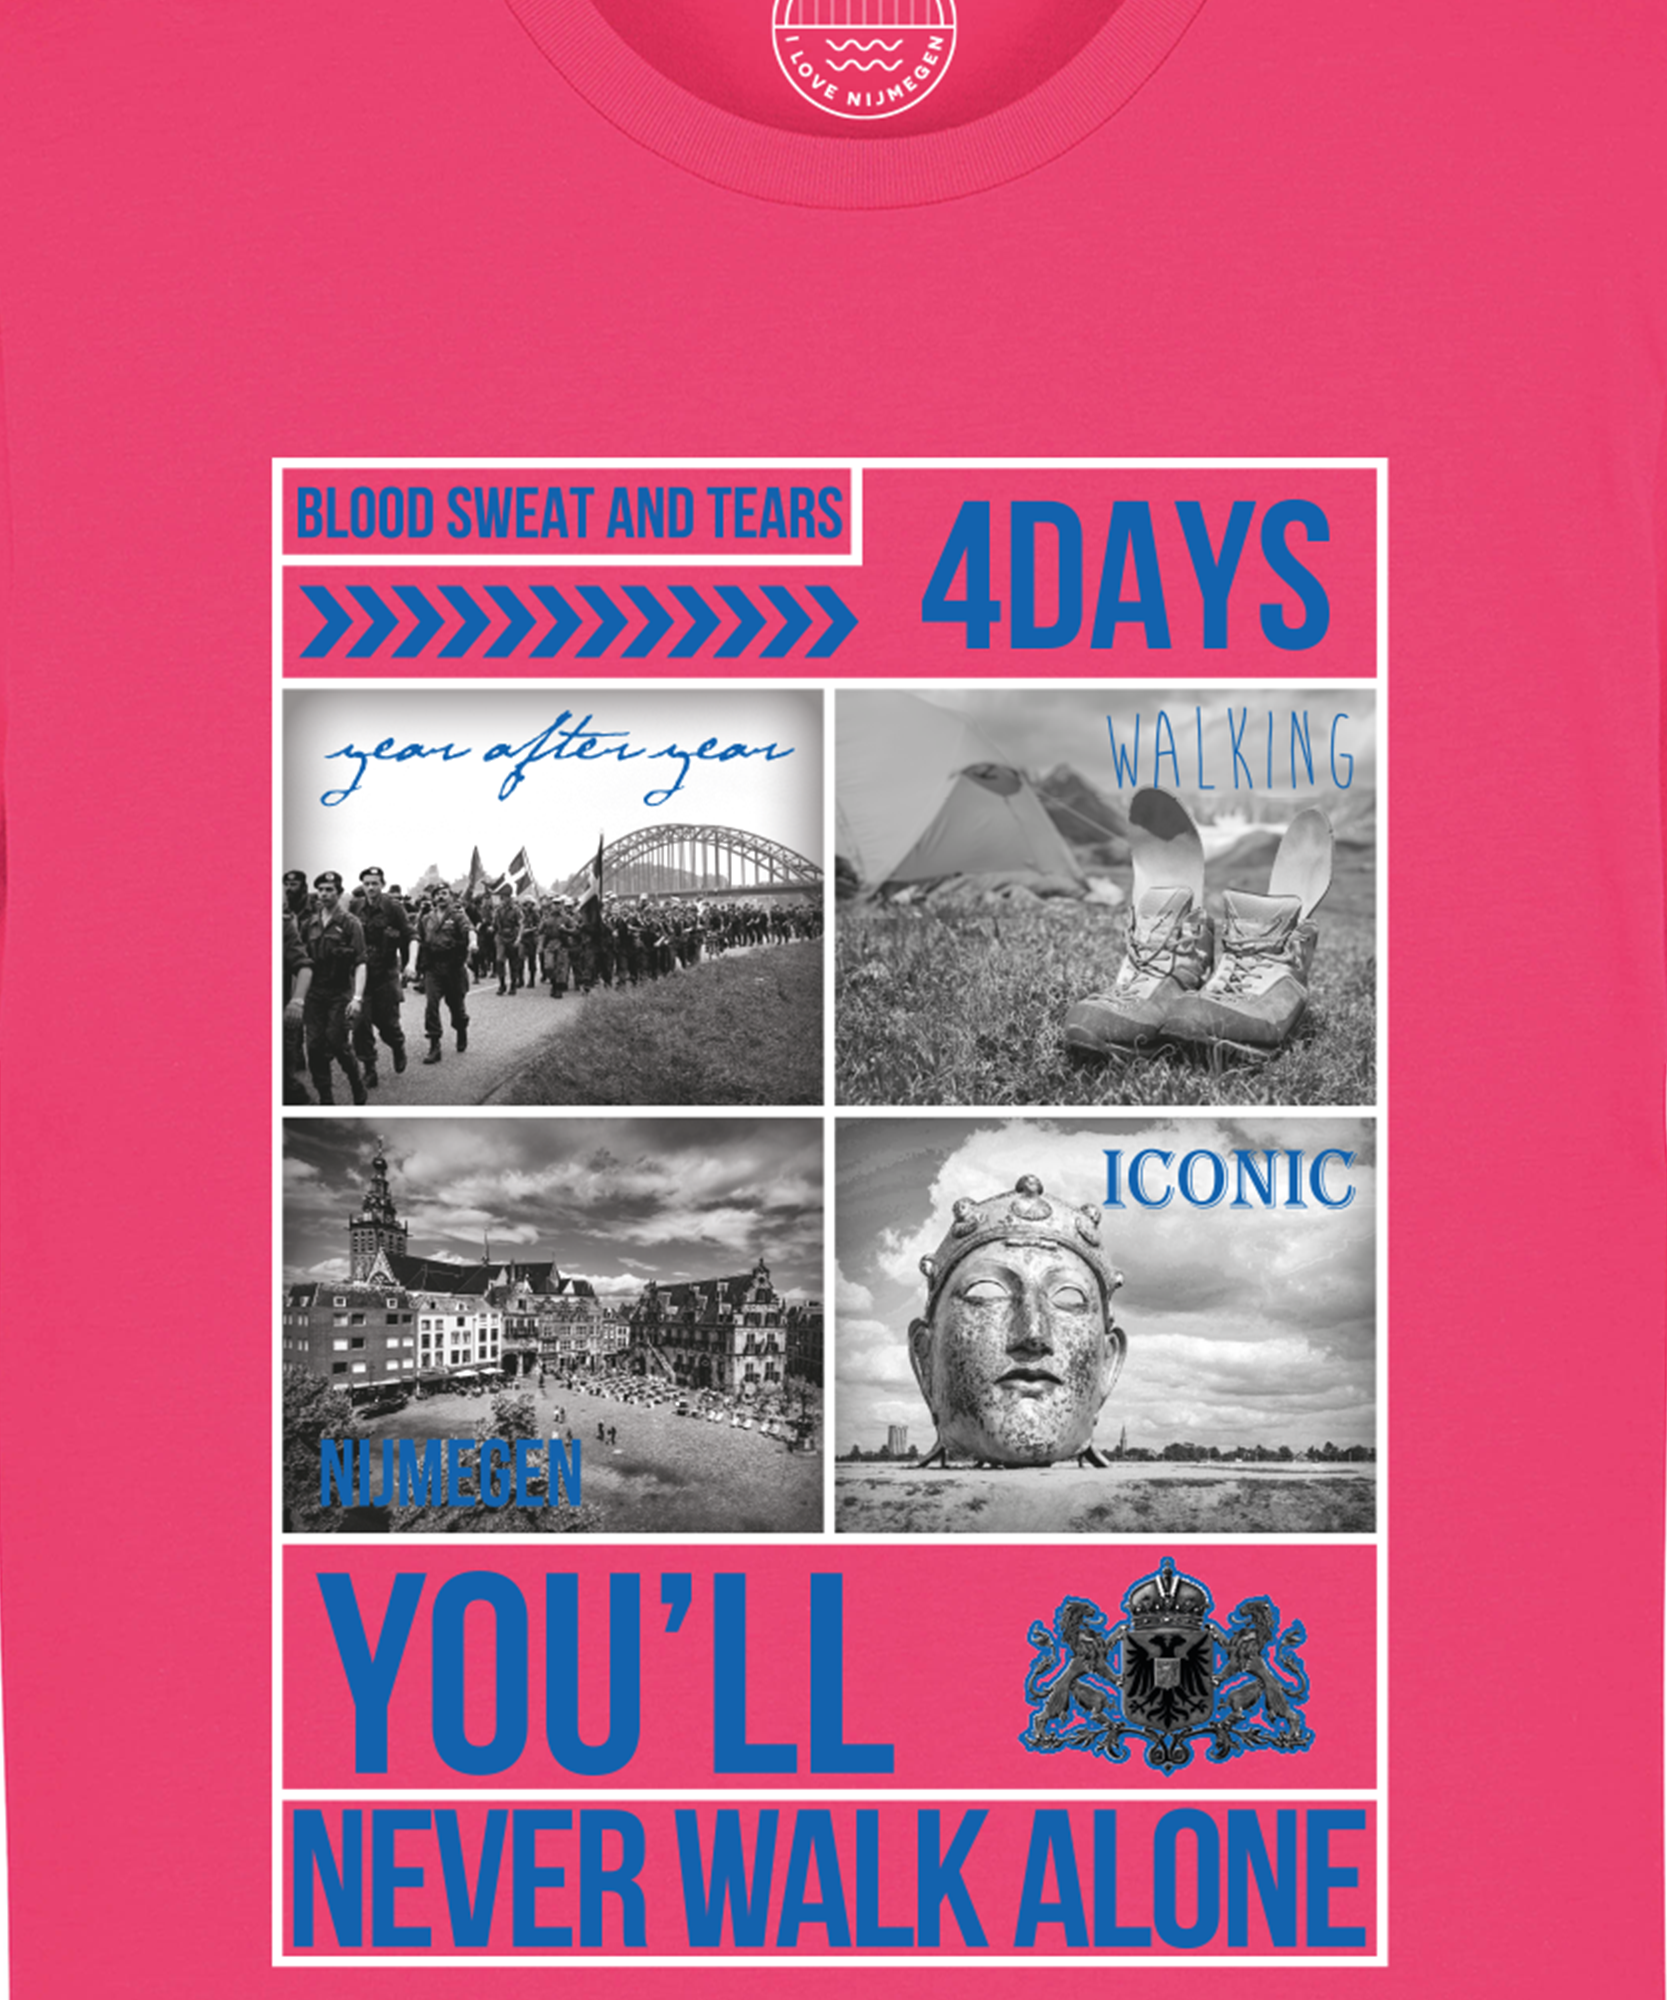 Nijmegen - Iconic - T-shirt - Pink